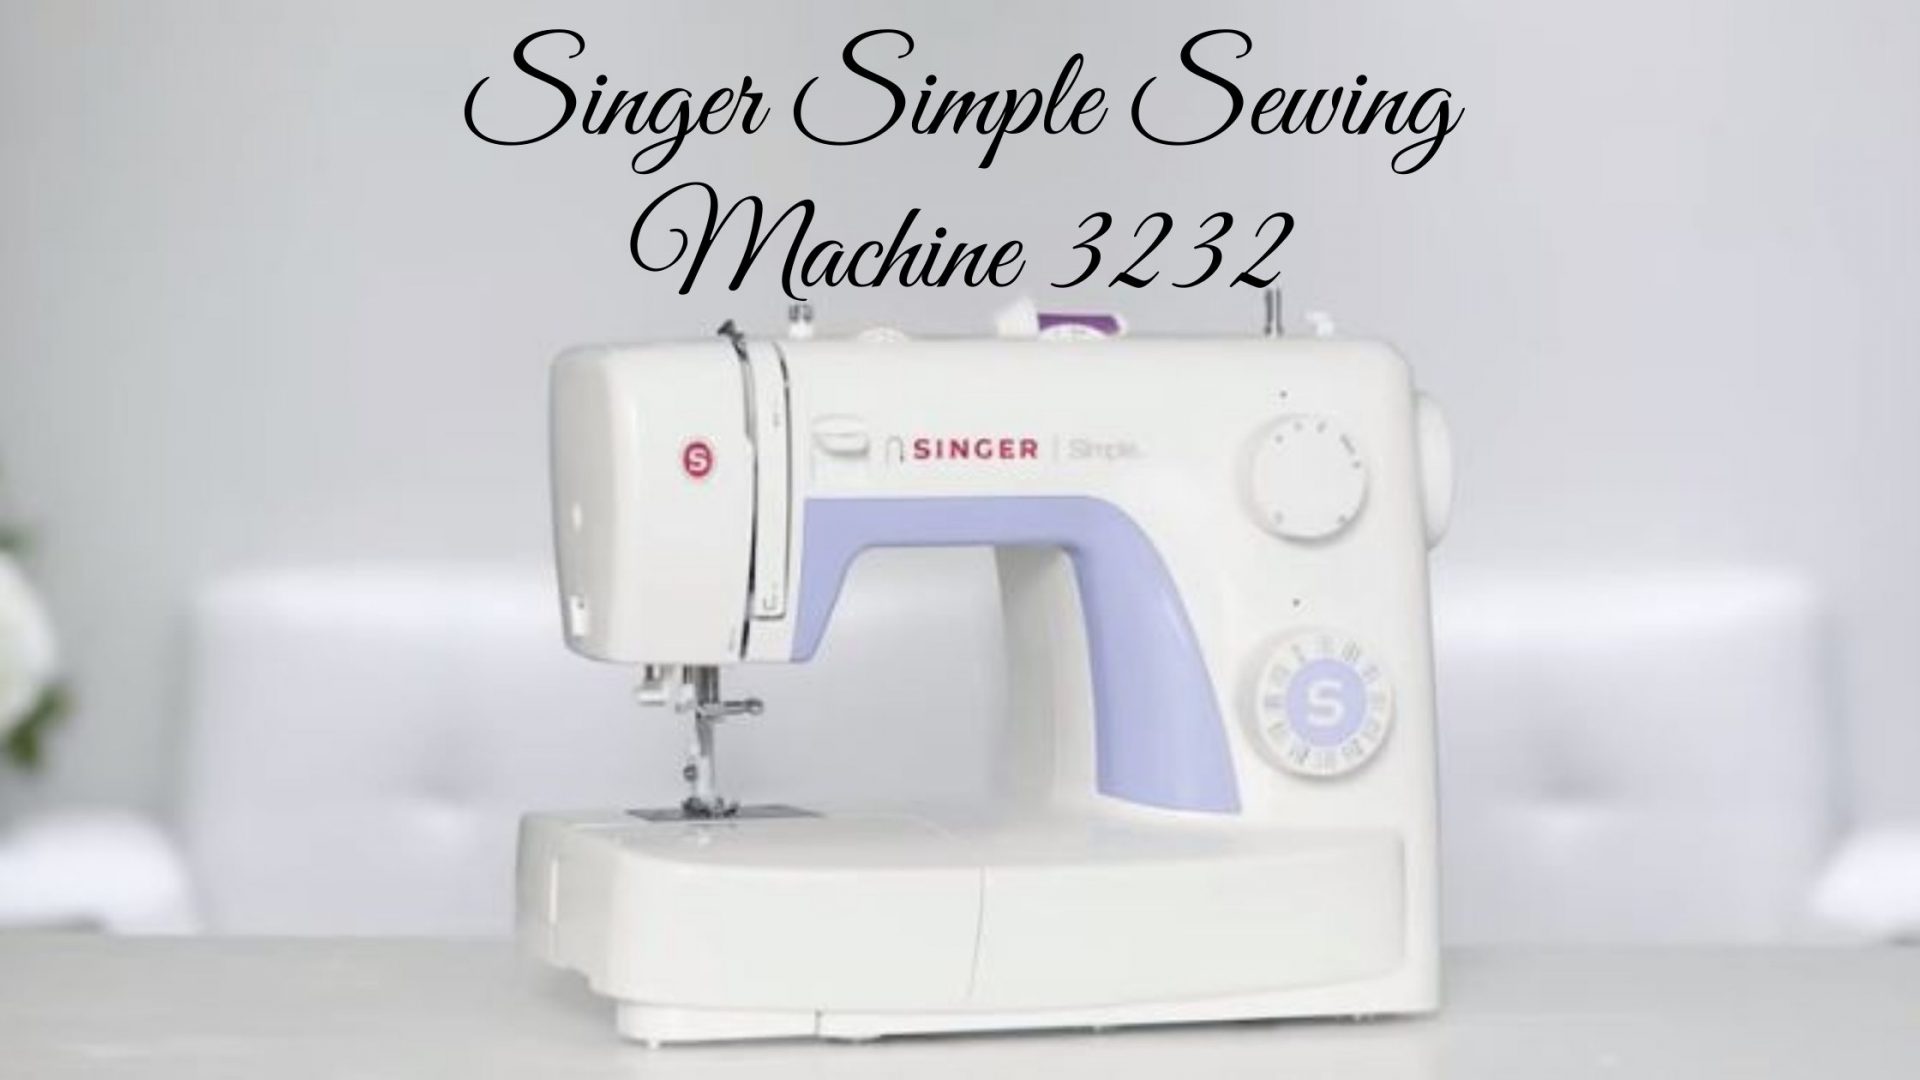 Singer Simple Sewing Machine 3232